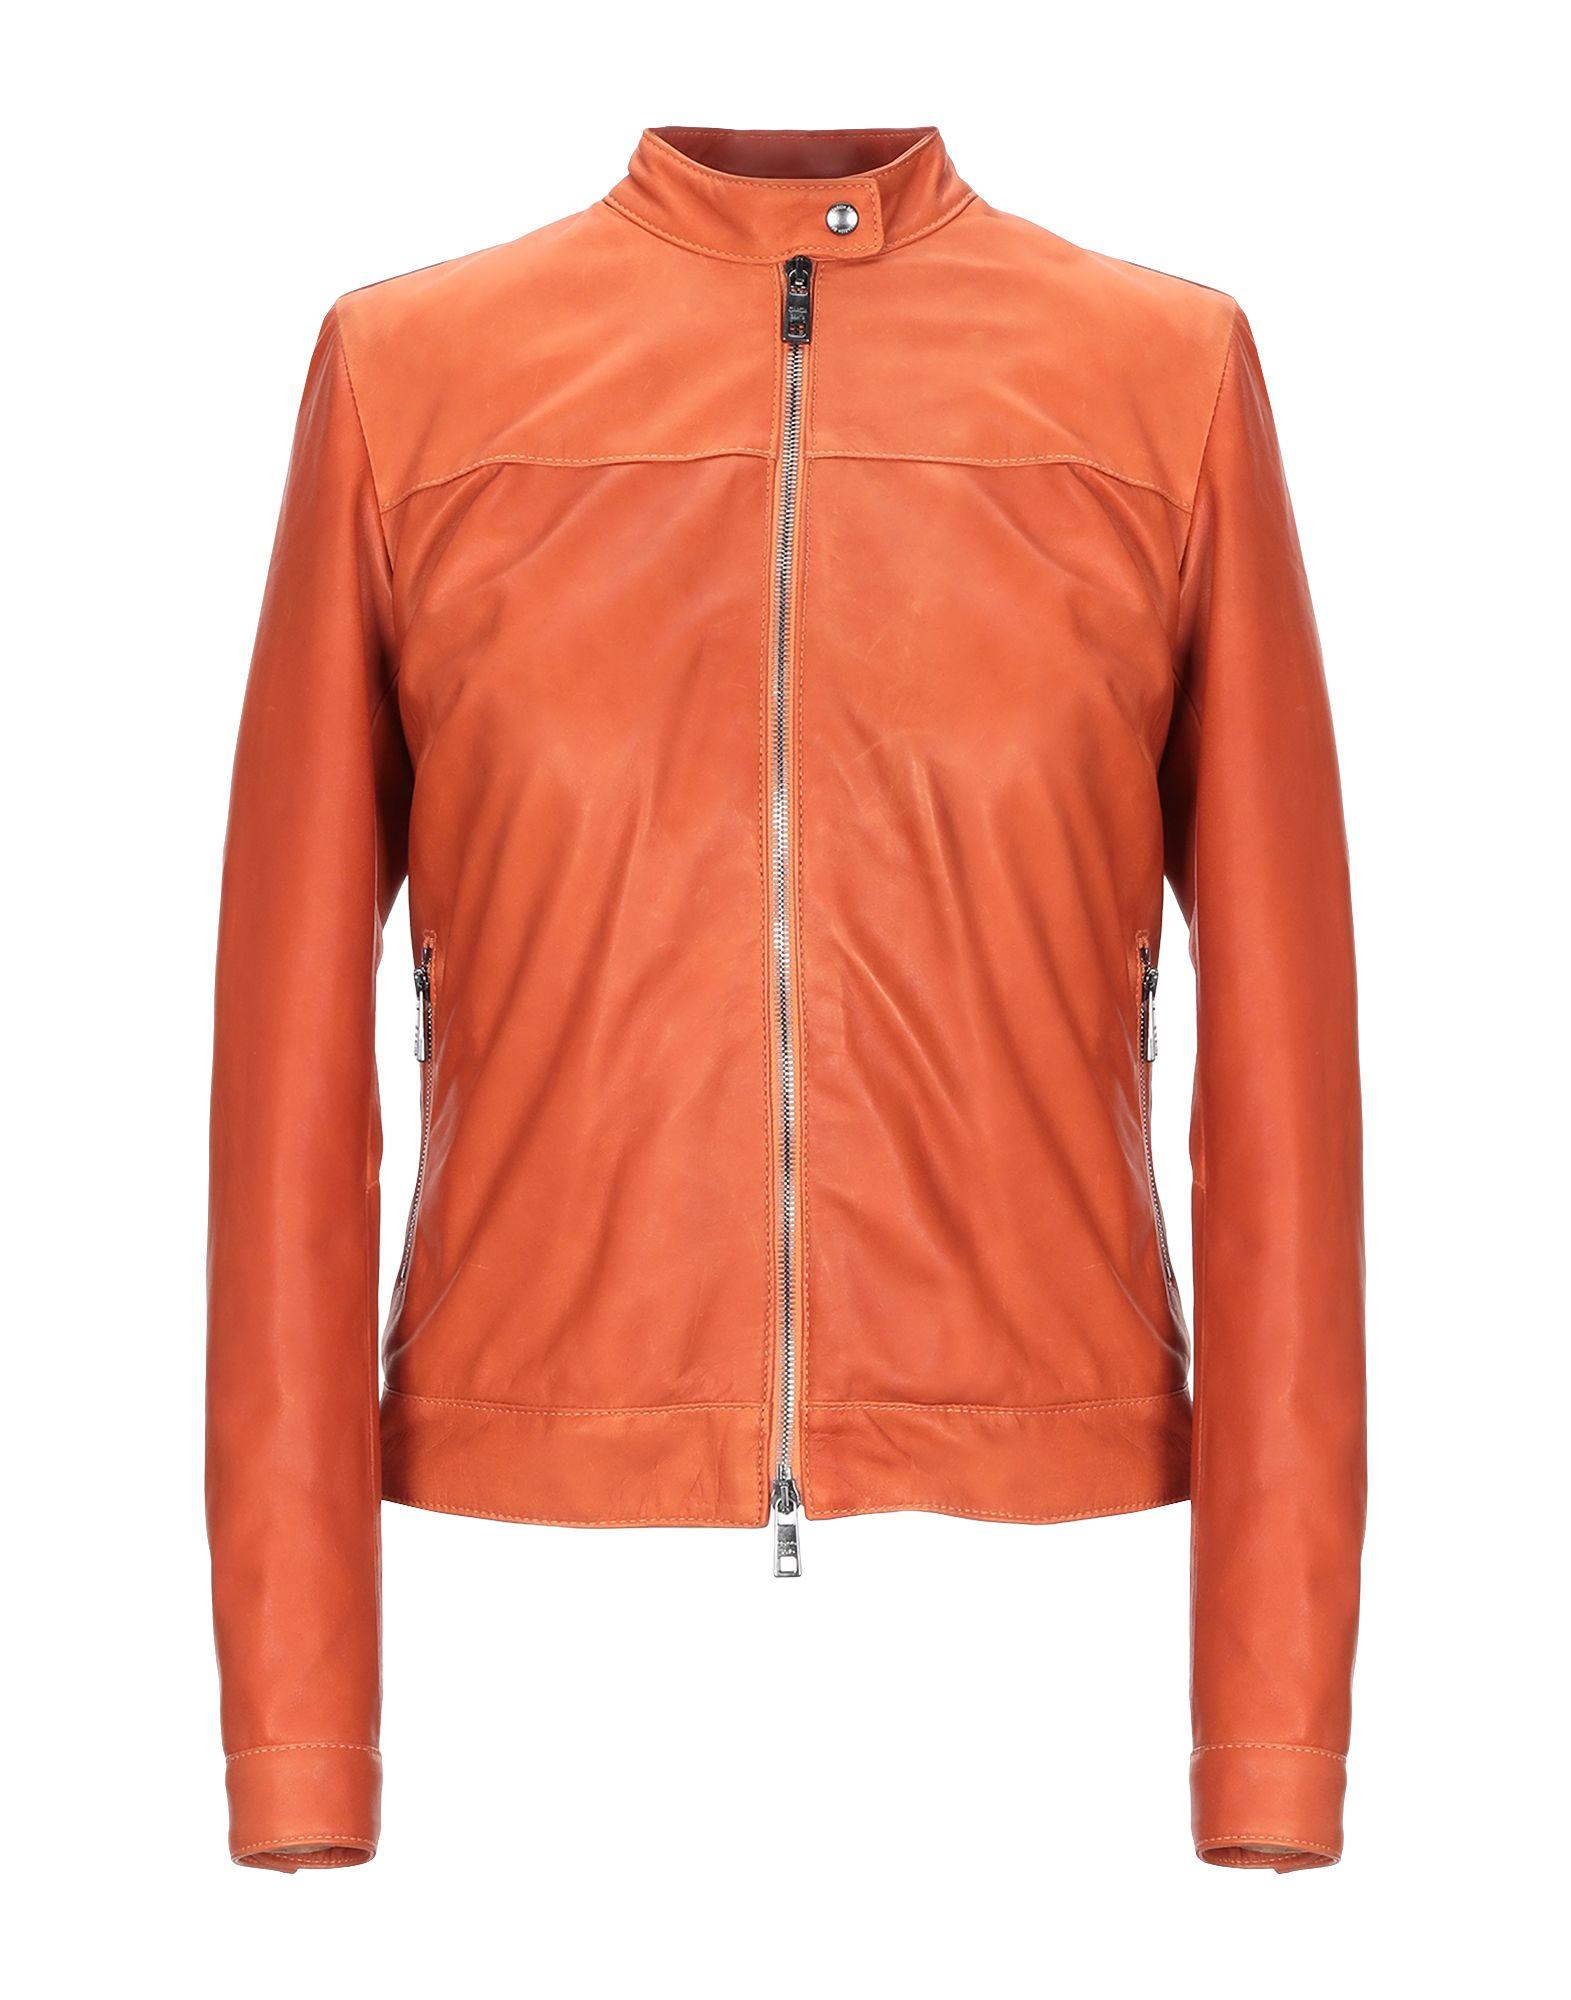 Giorgio Brato Leather Jacket in Orange - Lyst